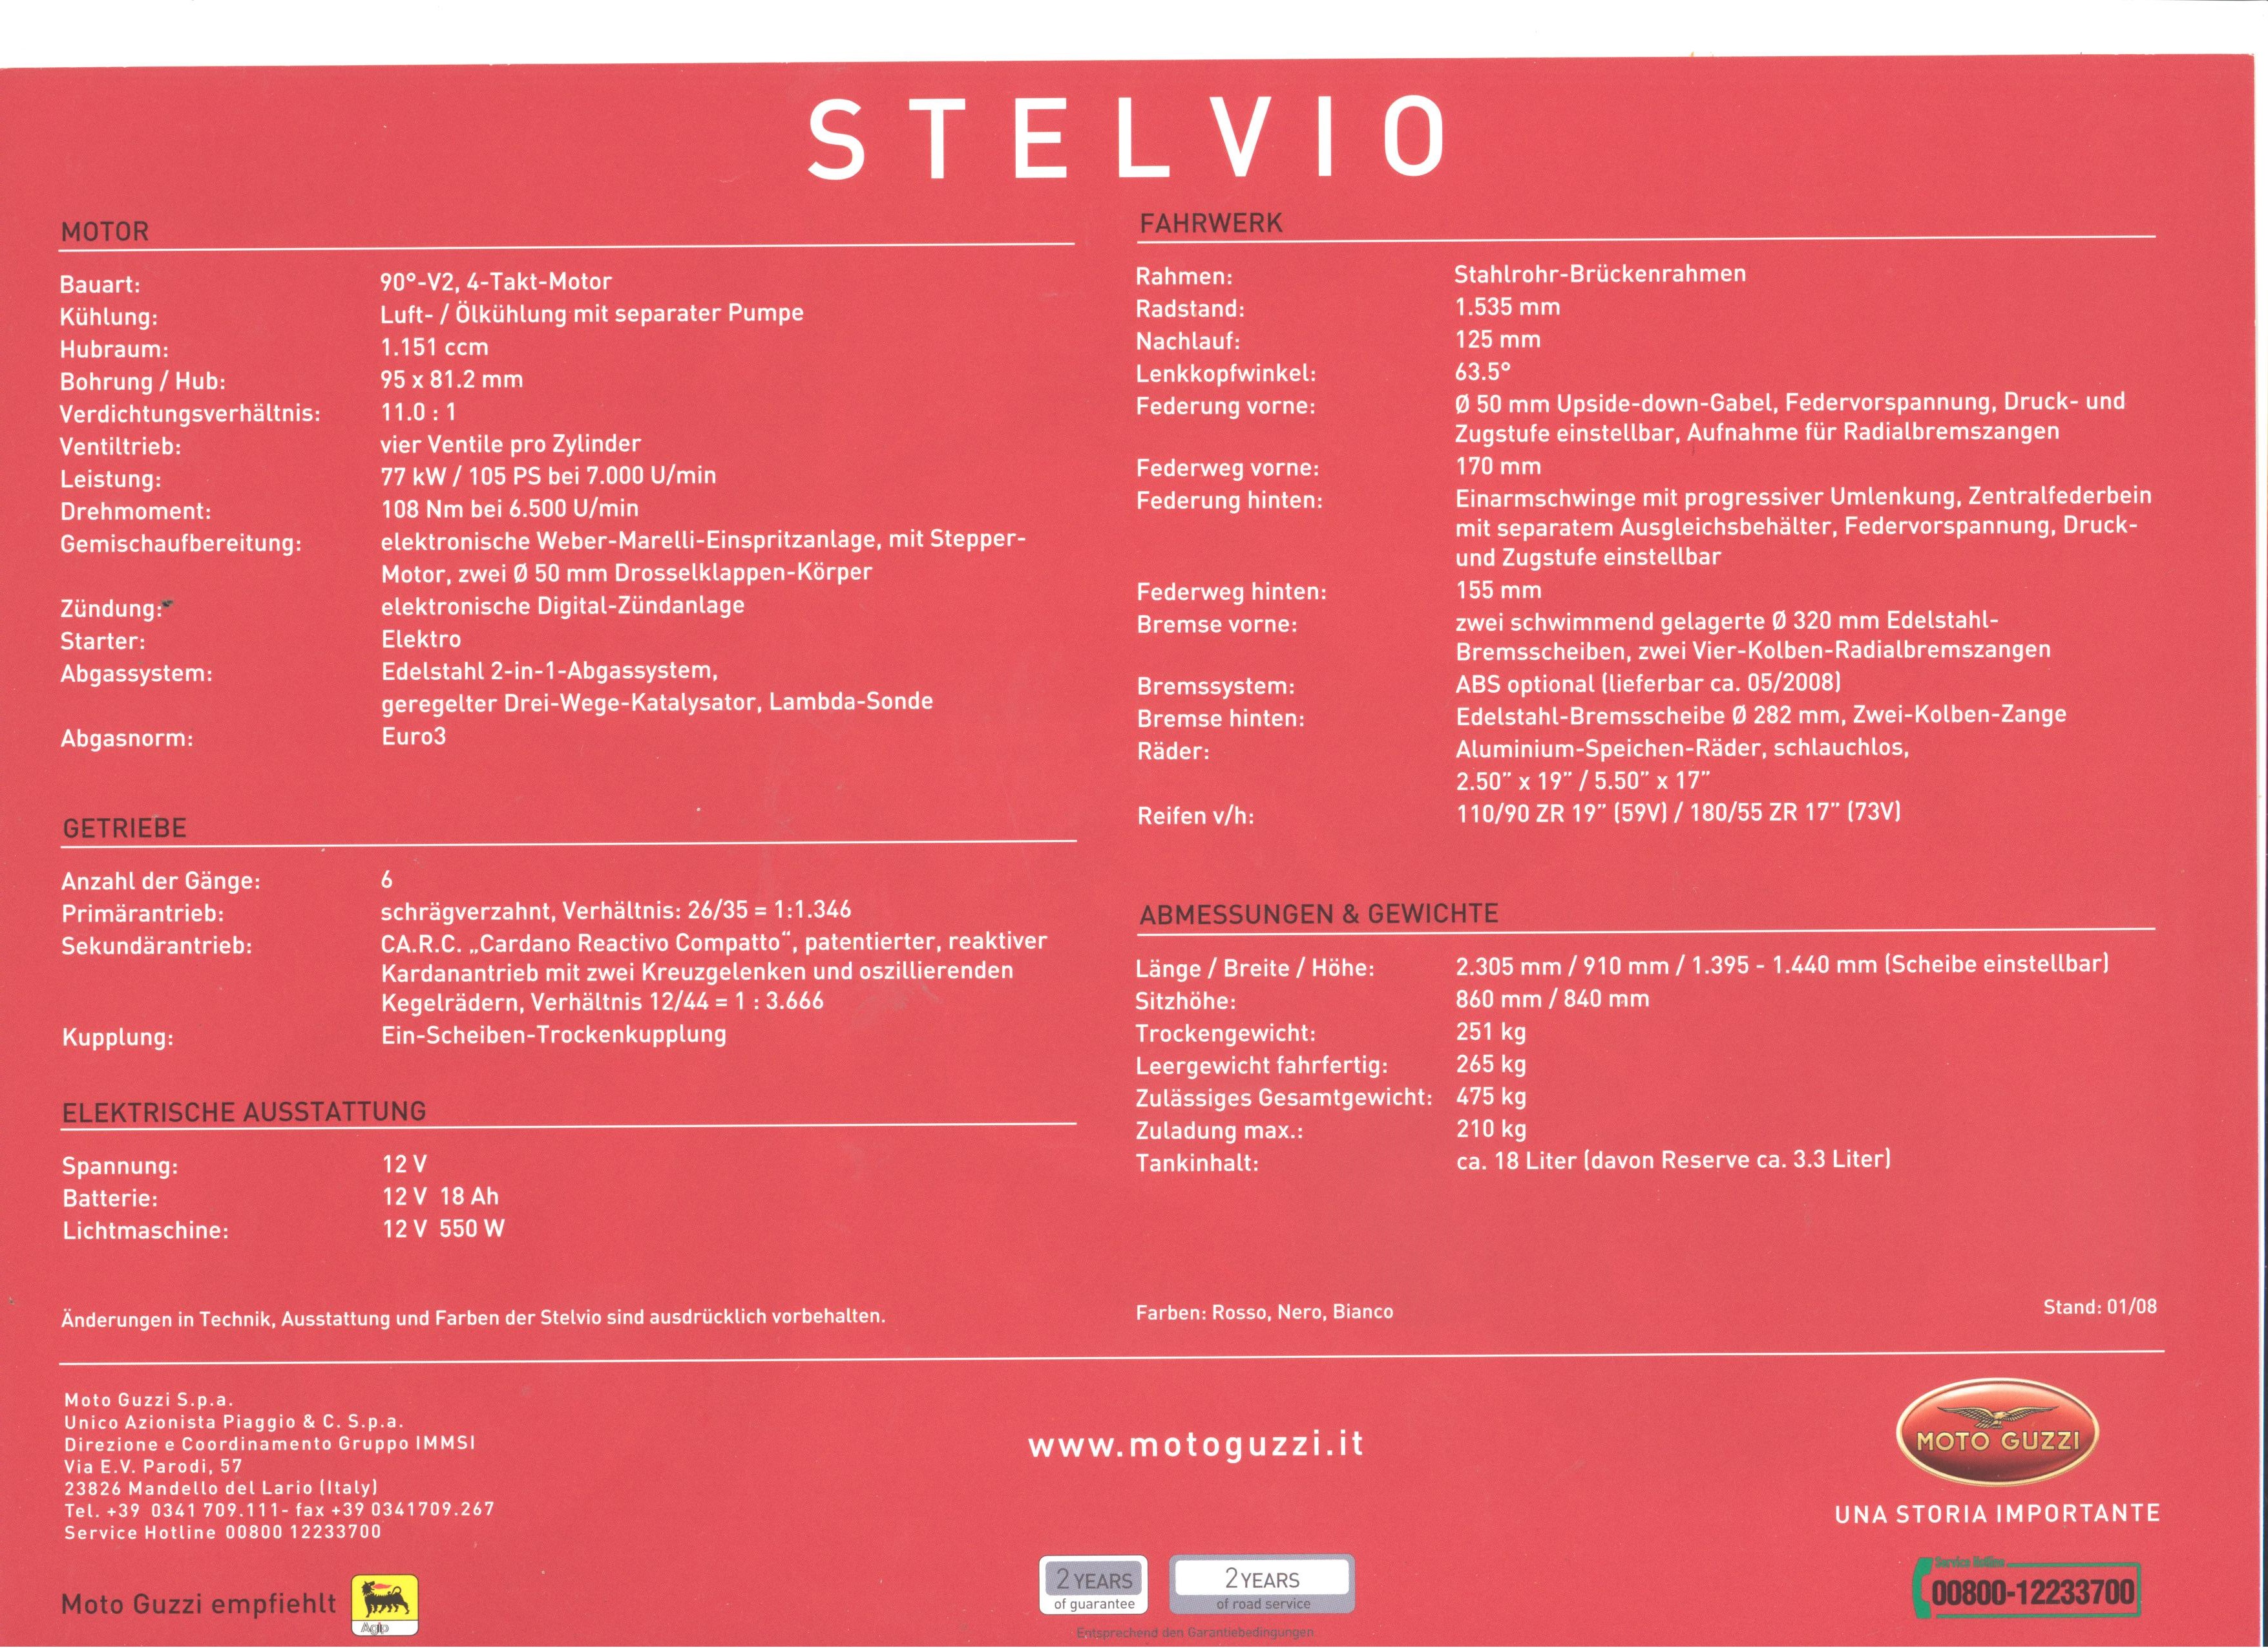 Moto Guzzi factory brochure: Stelvio